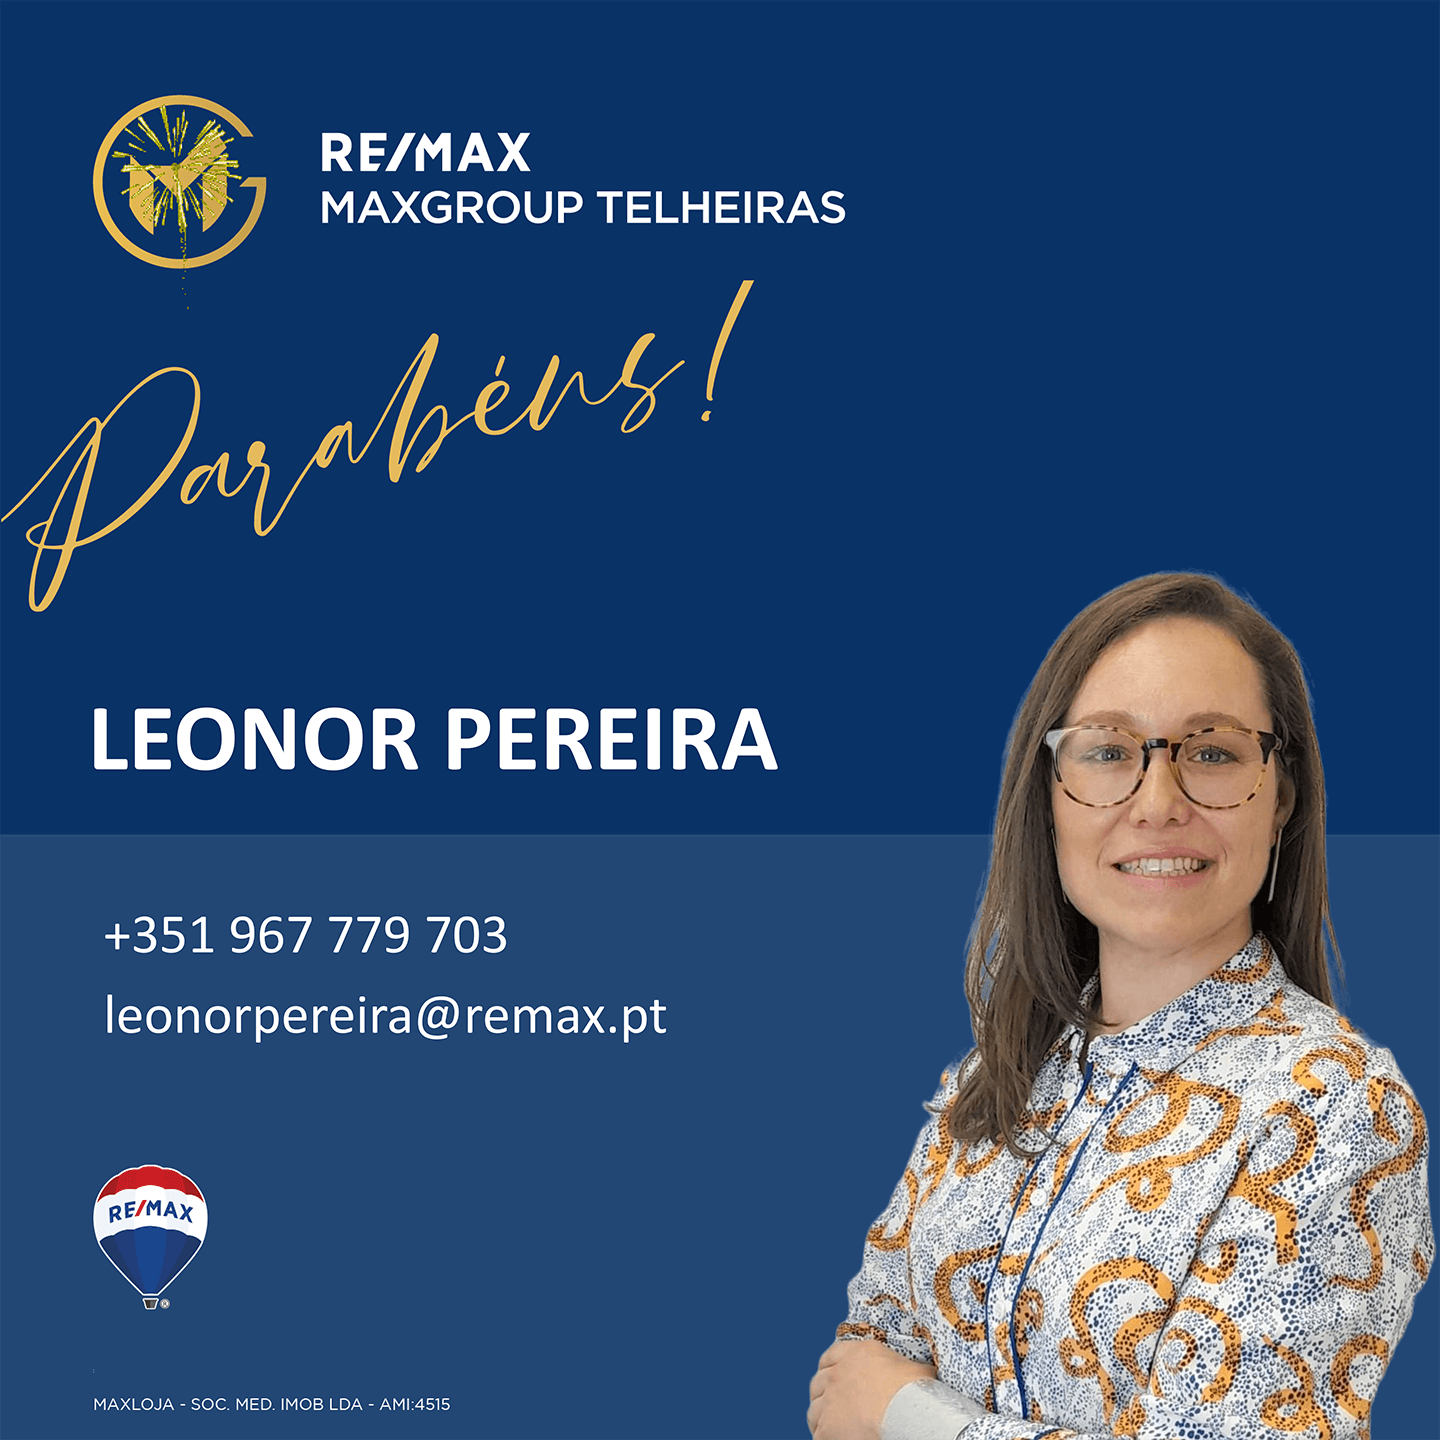 Leonor Pereira